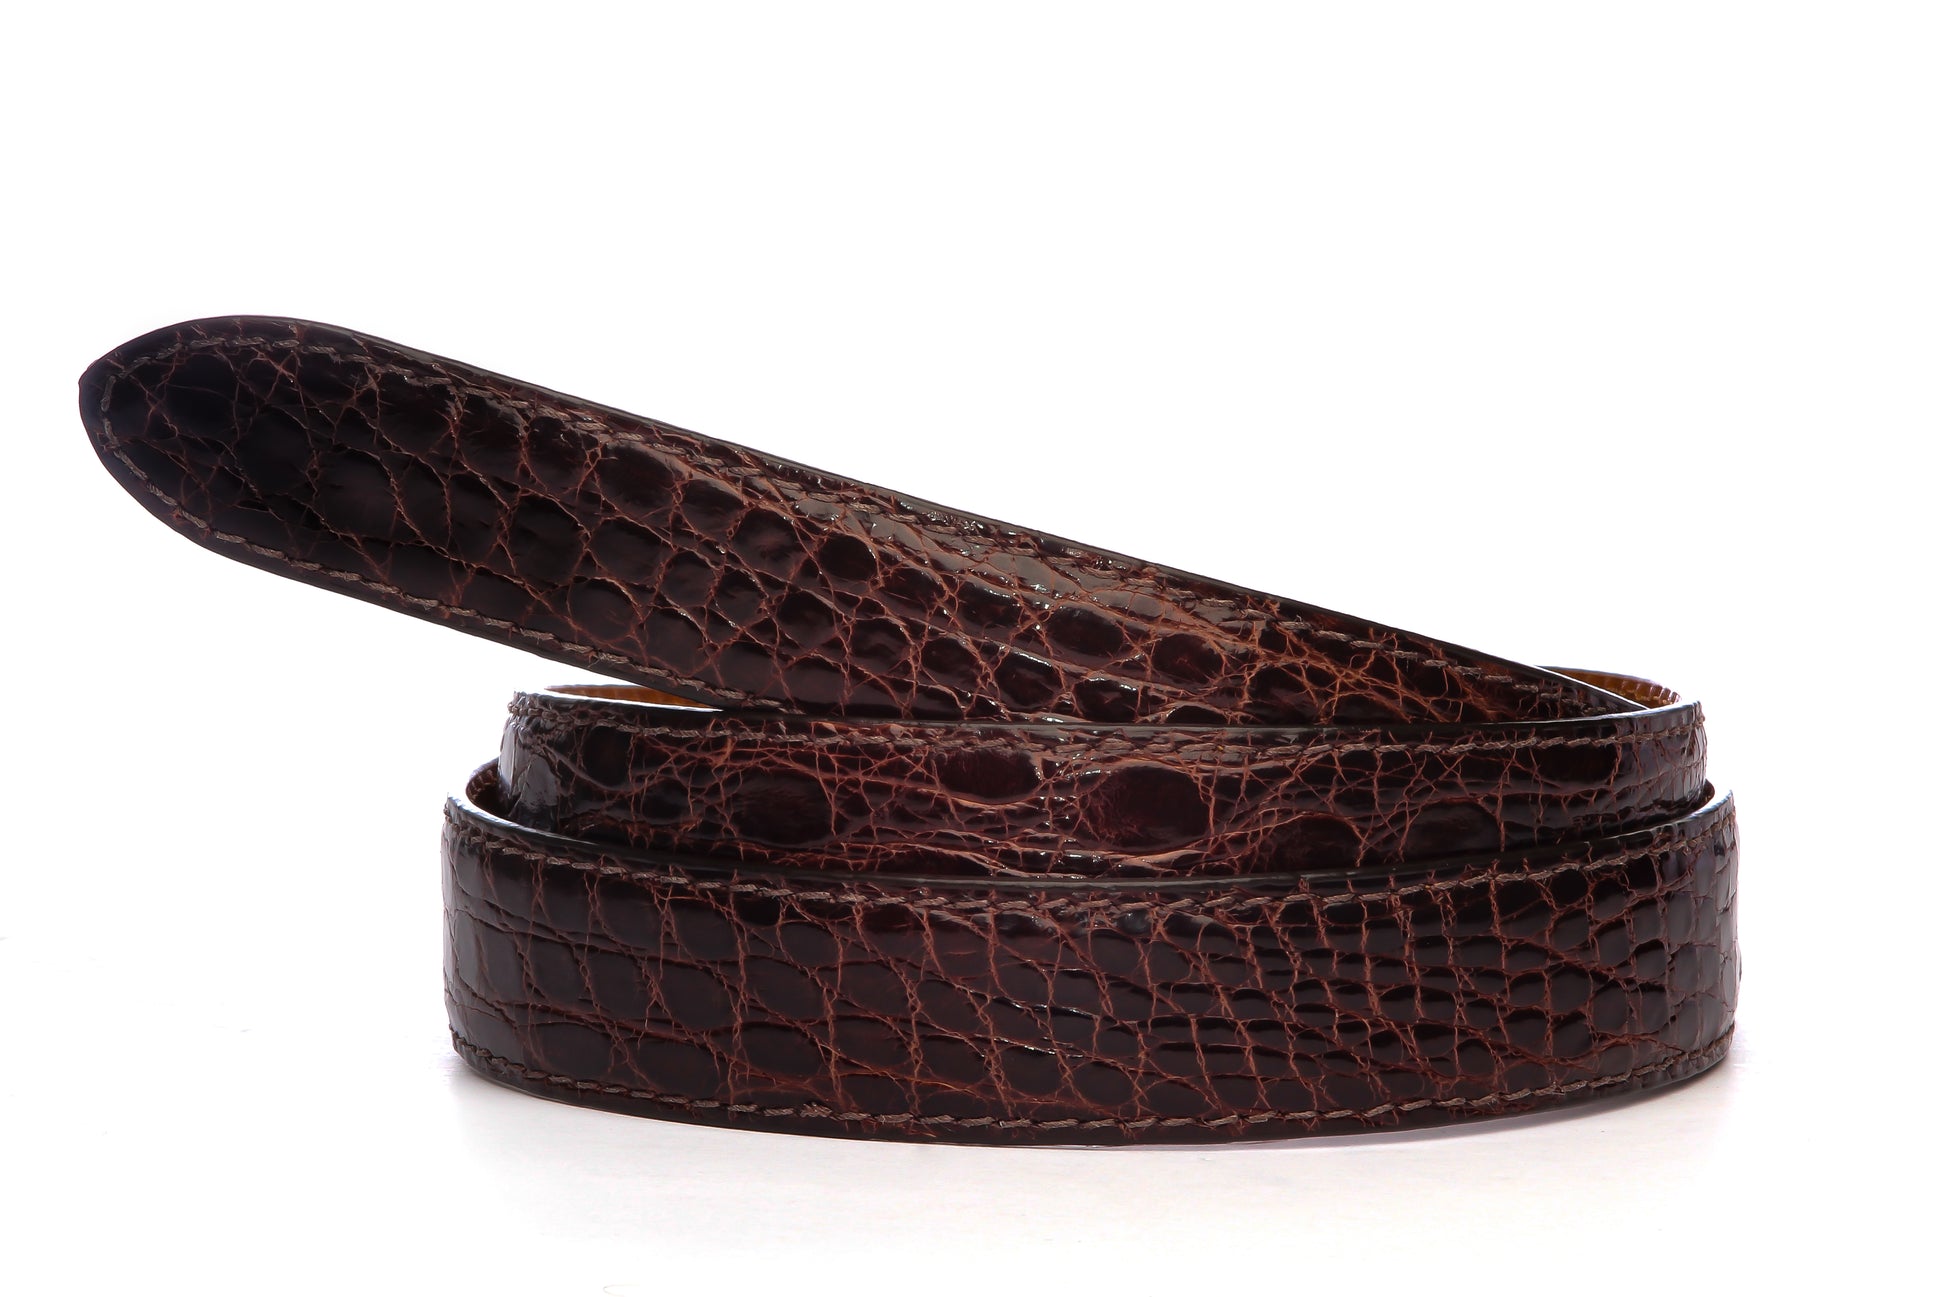 Men's crocodile belt strap in dark brown with a 1.25-inch width, formal look, full roll